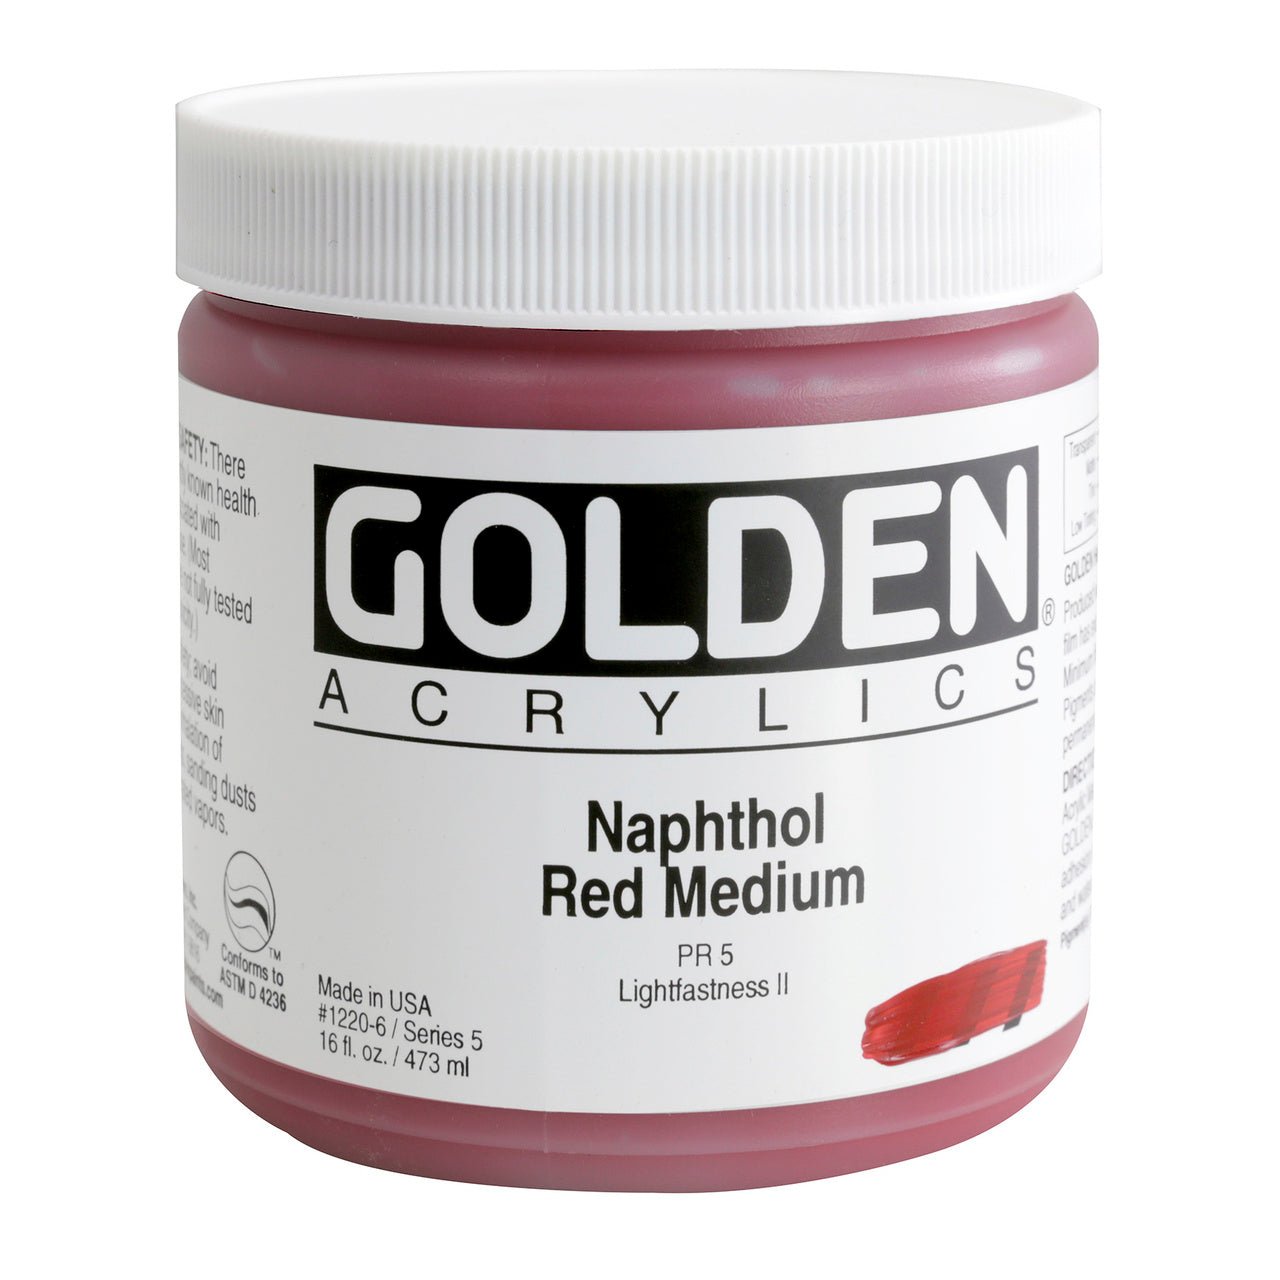 Golden Heavy Body Acrylic Naphthol Red Medium 16 oz - merriartist.com